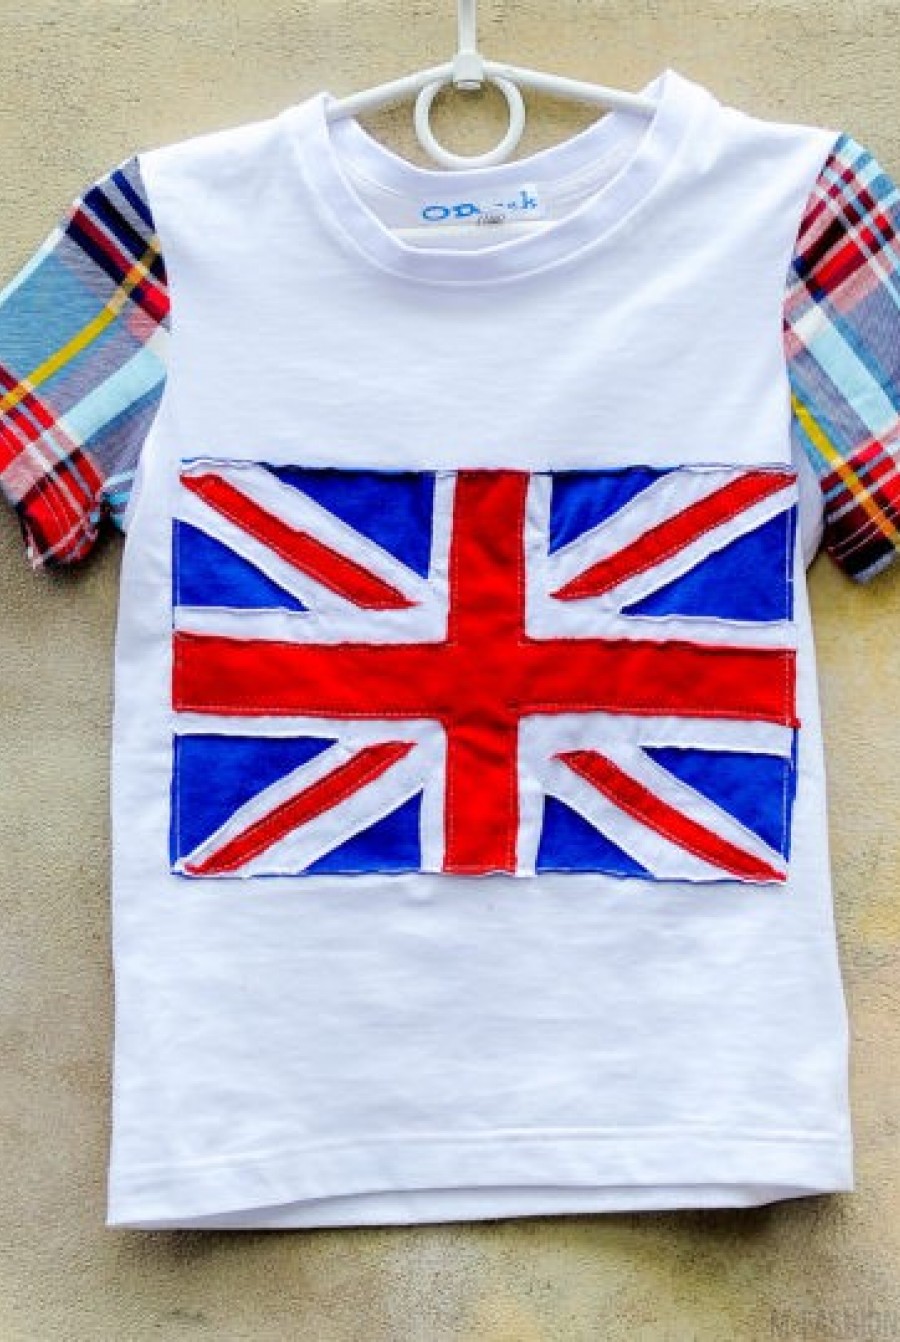 Детская футболка с флагом Британии - Фото 1